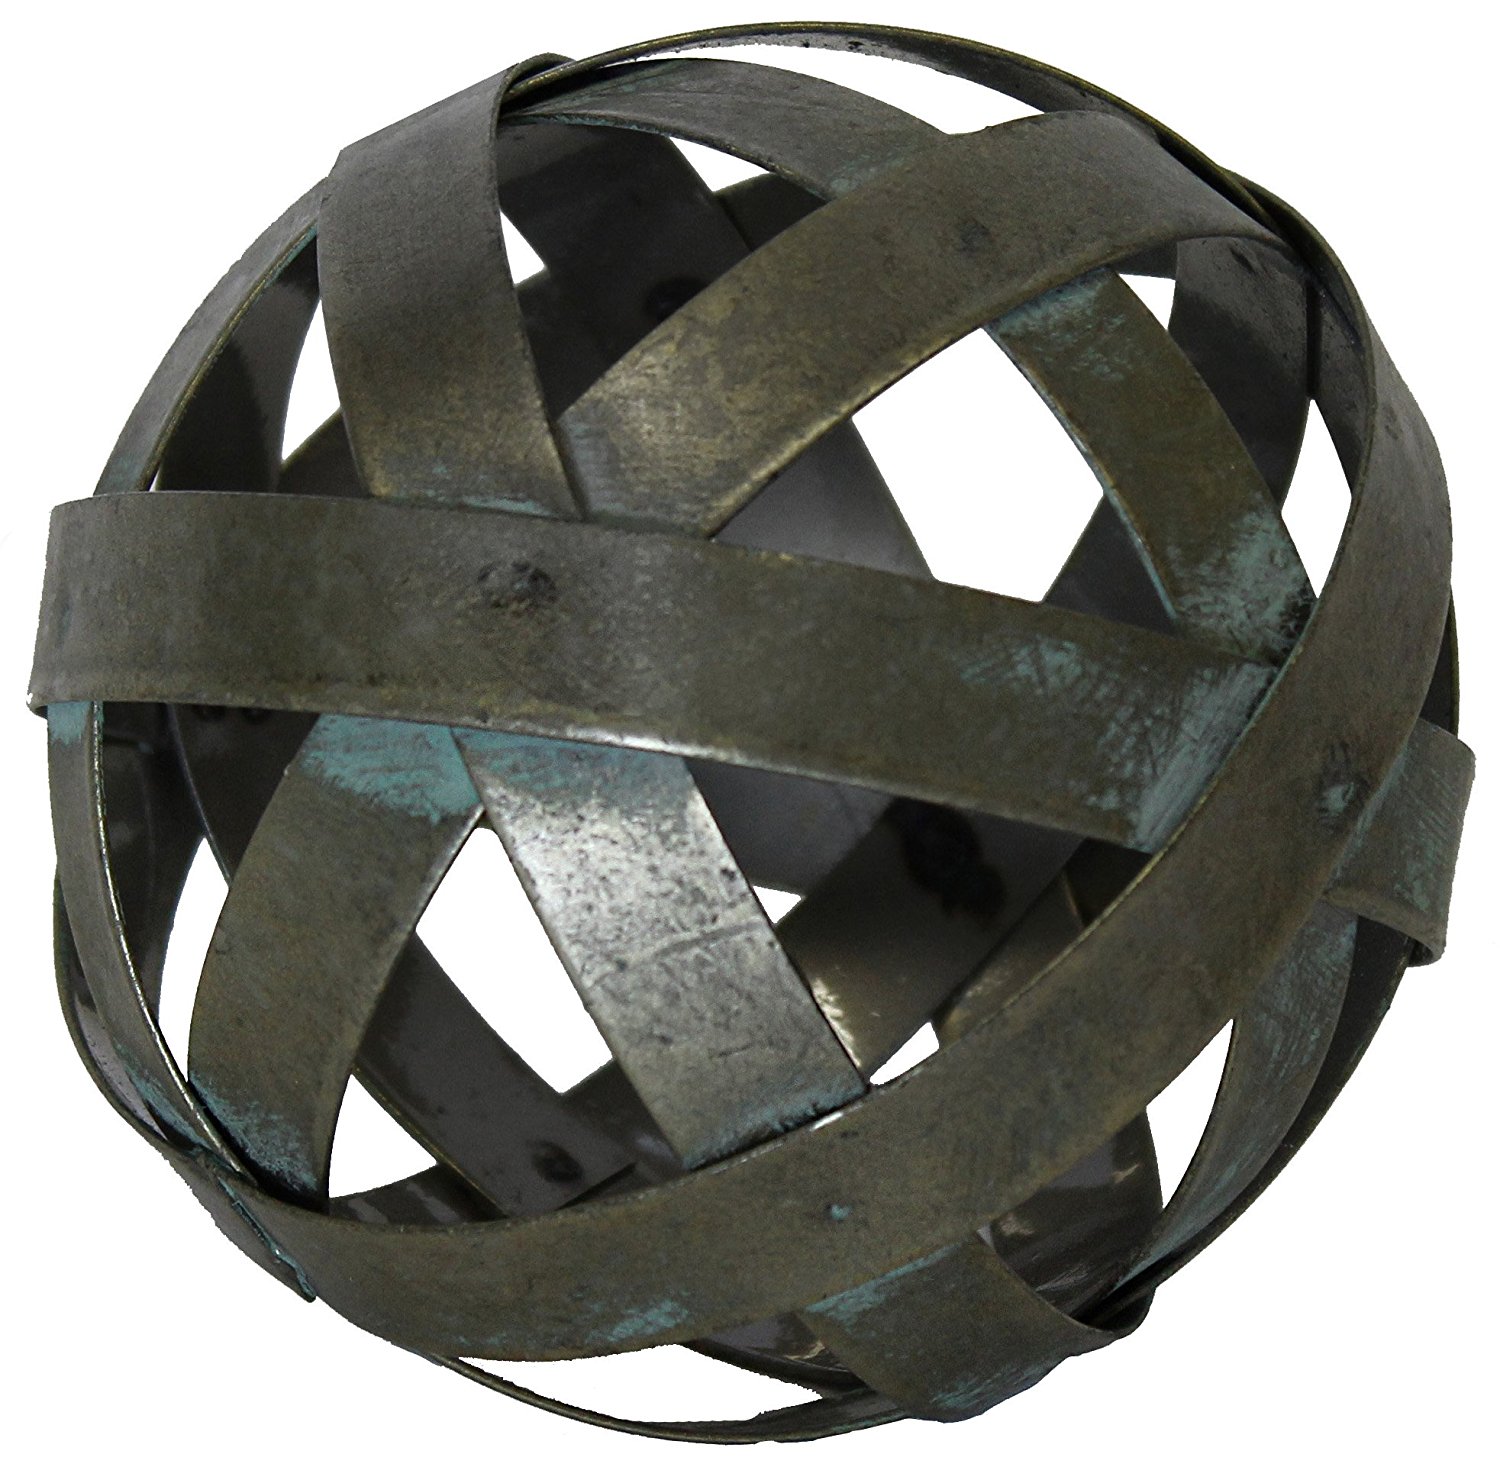 Decorative Metal Sphere | A Renovation Story